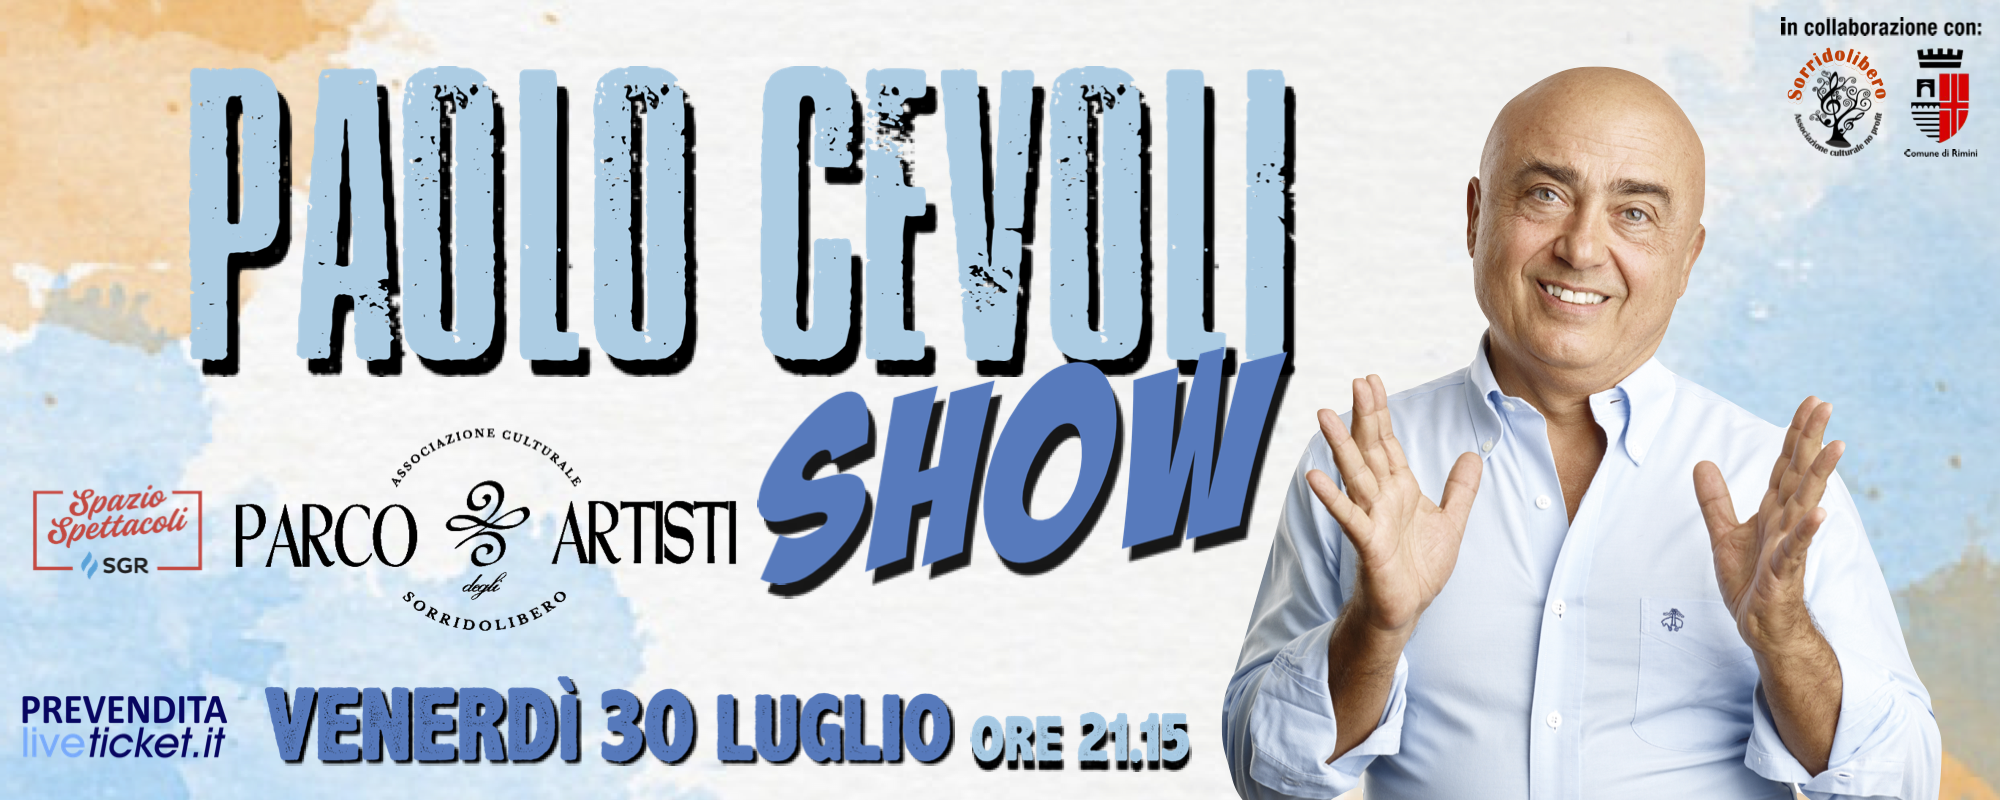 Paolo Cevoli Show